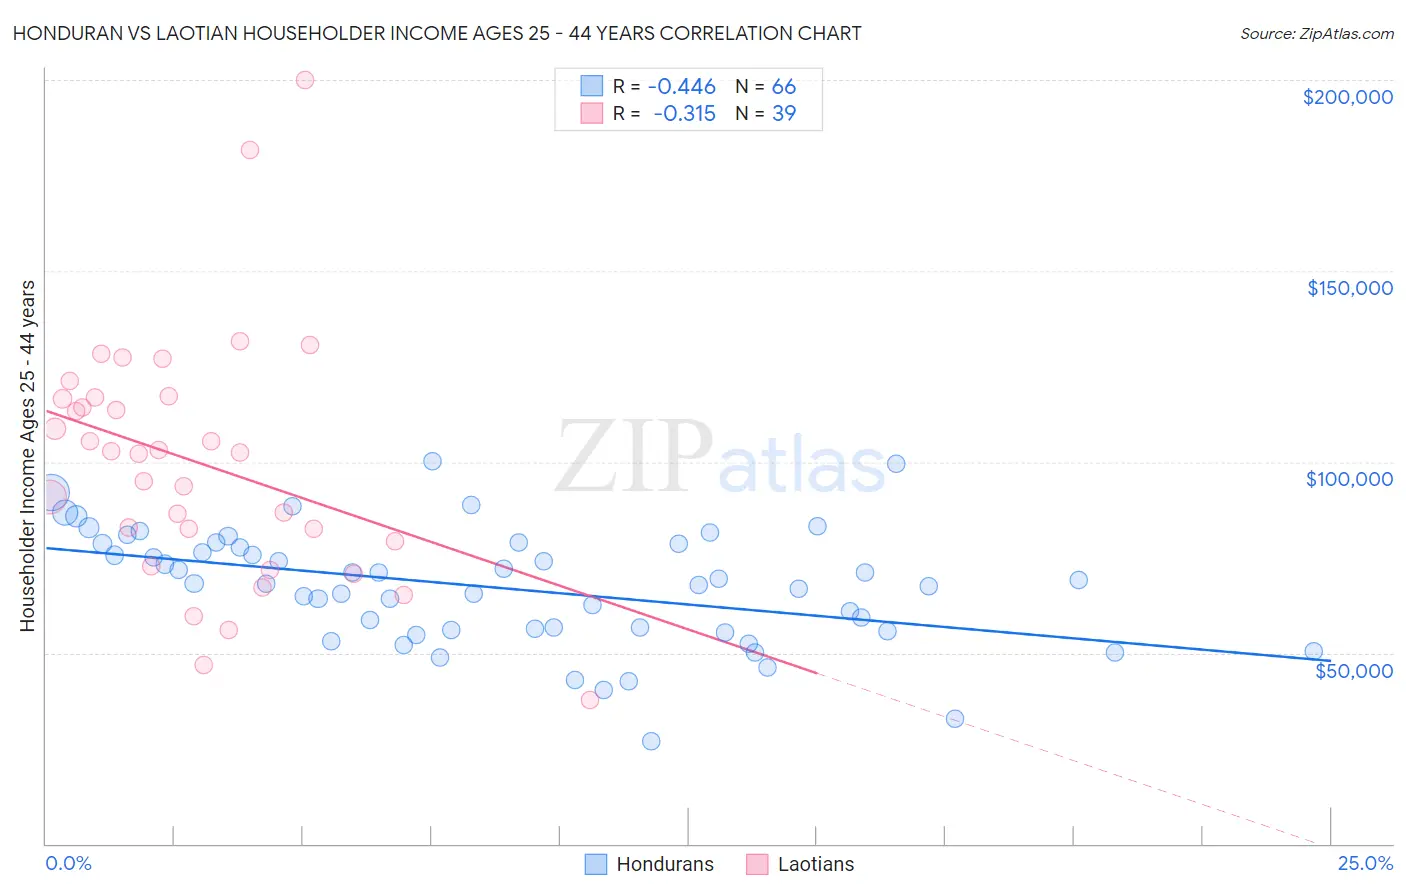 Honduran vs Laotian Householder Income Ages 25 - 44 years